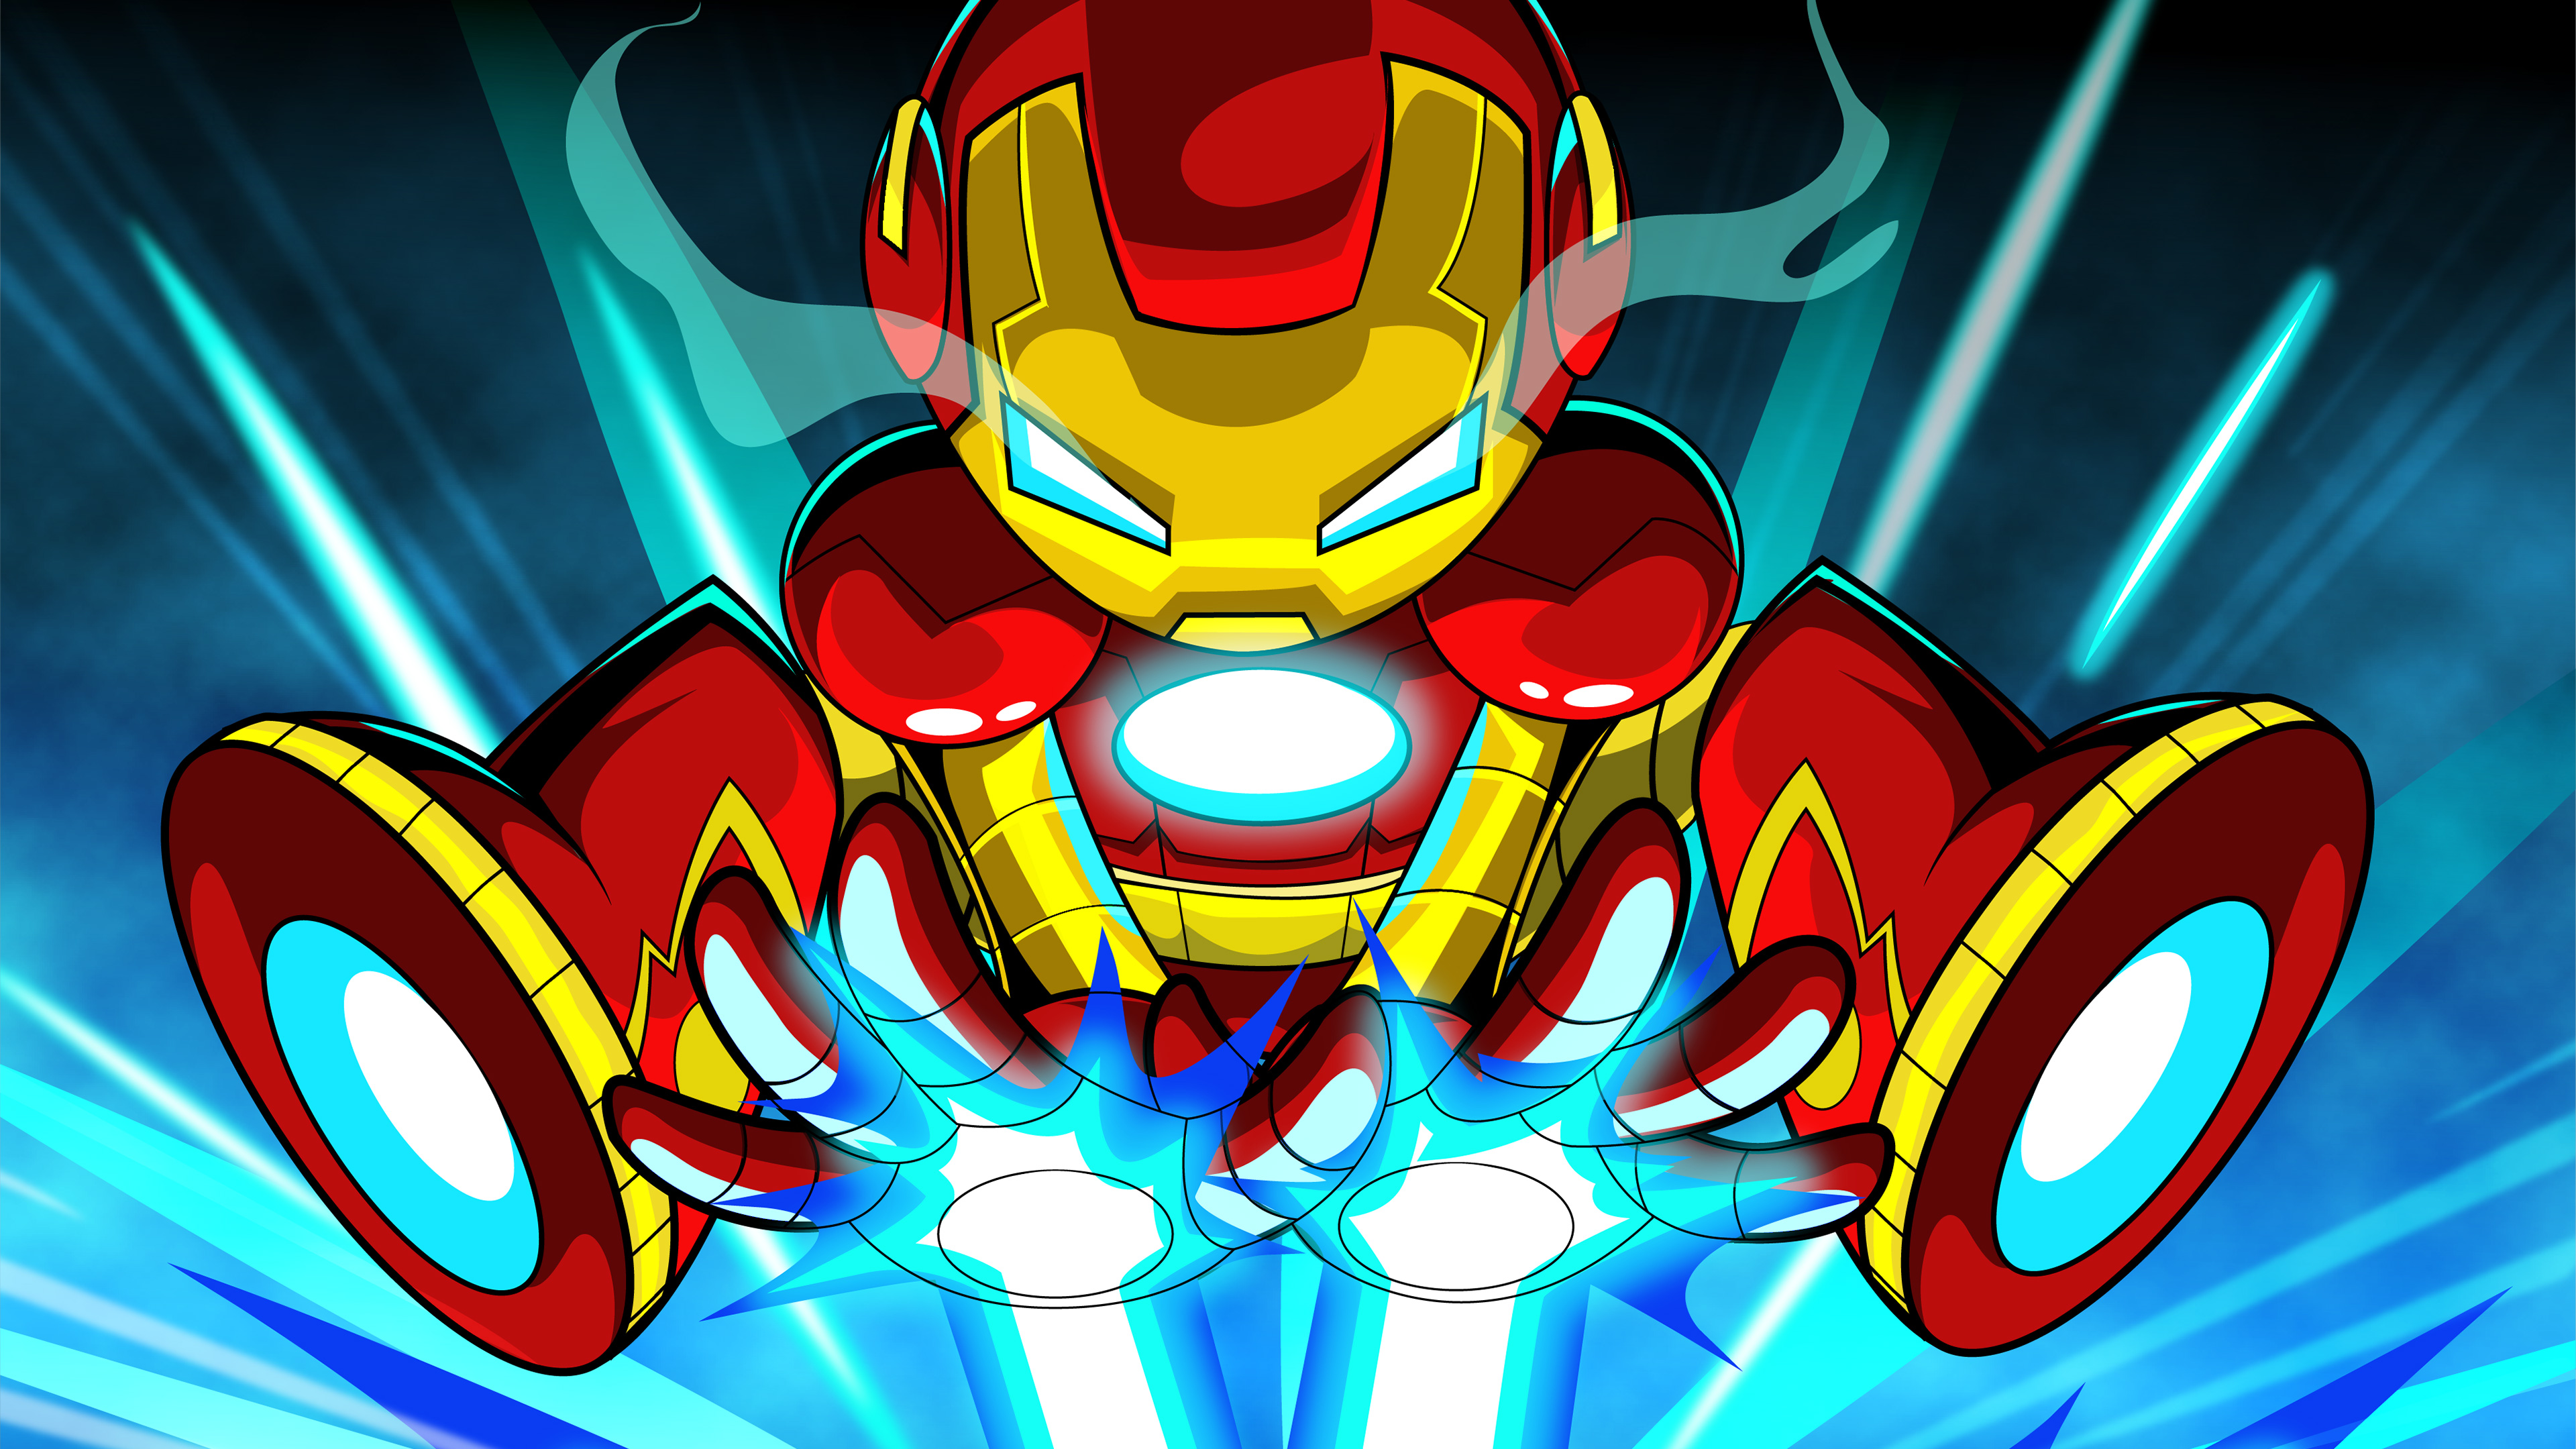 Iron Man Cartoon Digital Art 4k Hd Superheroes 4k Wallpapers Images Backgrounds Photos And